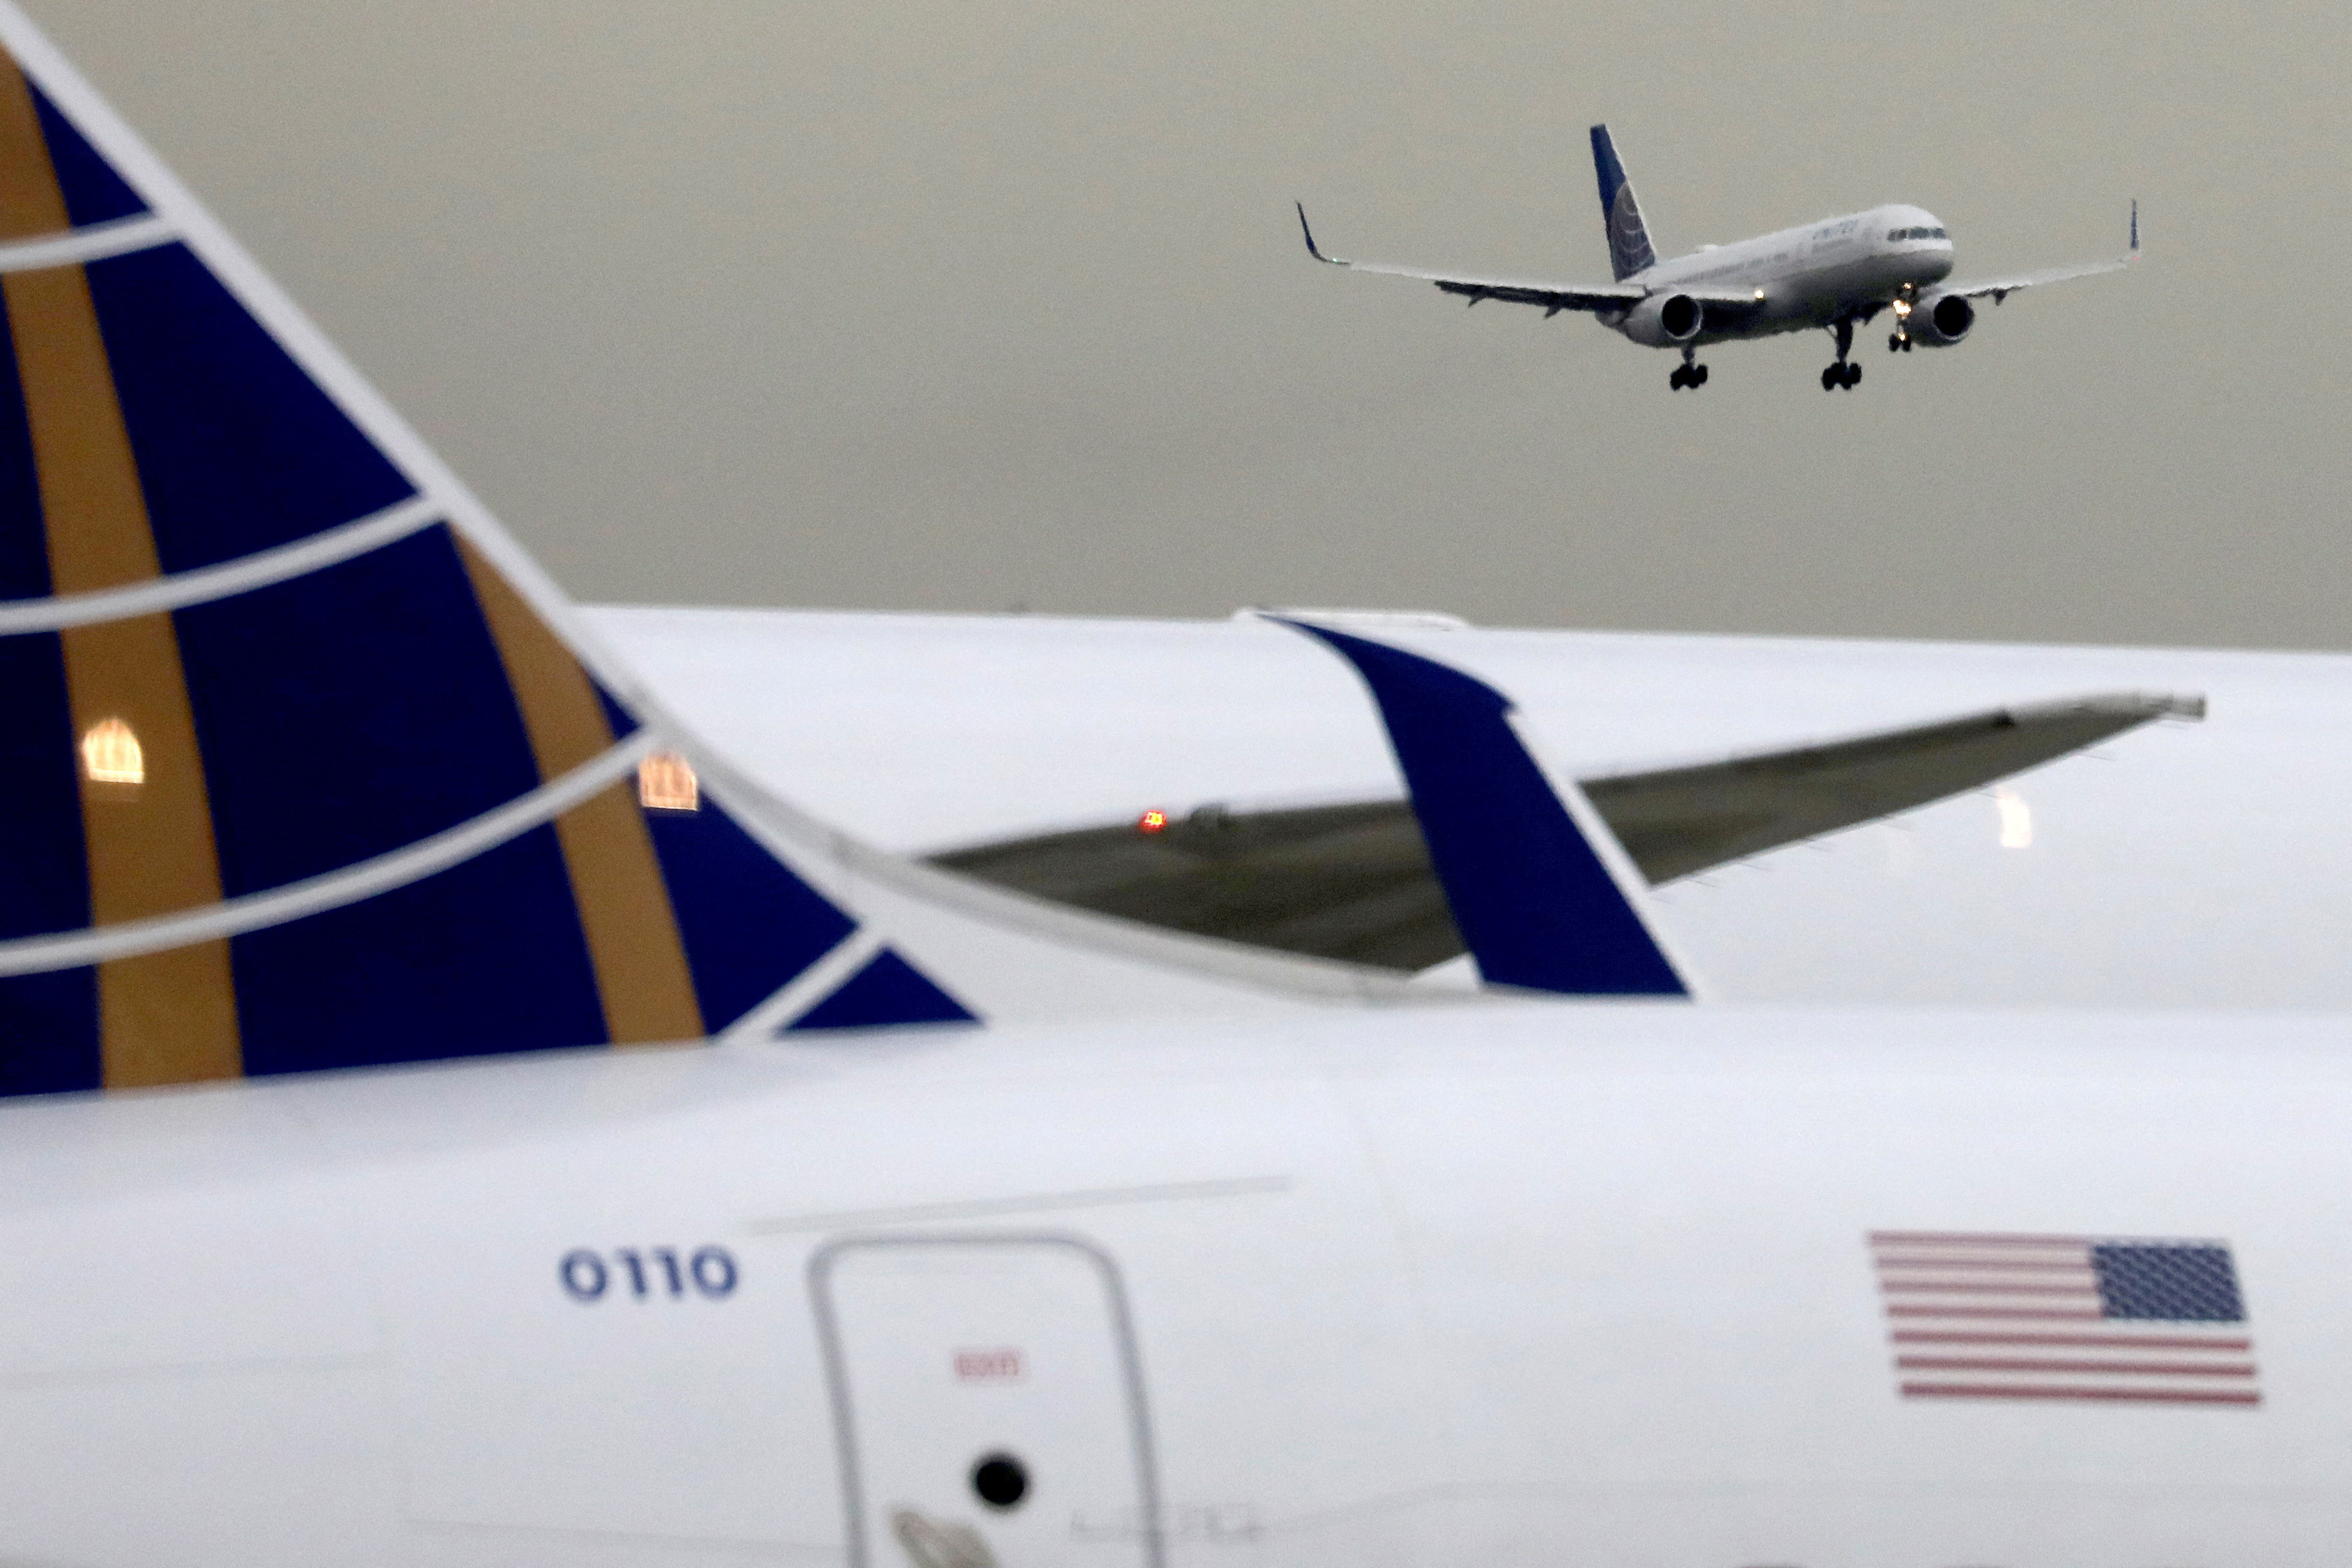 A United Airlines passenger jet lands at Newark Liberty International Airport